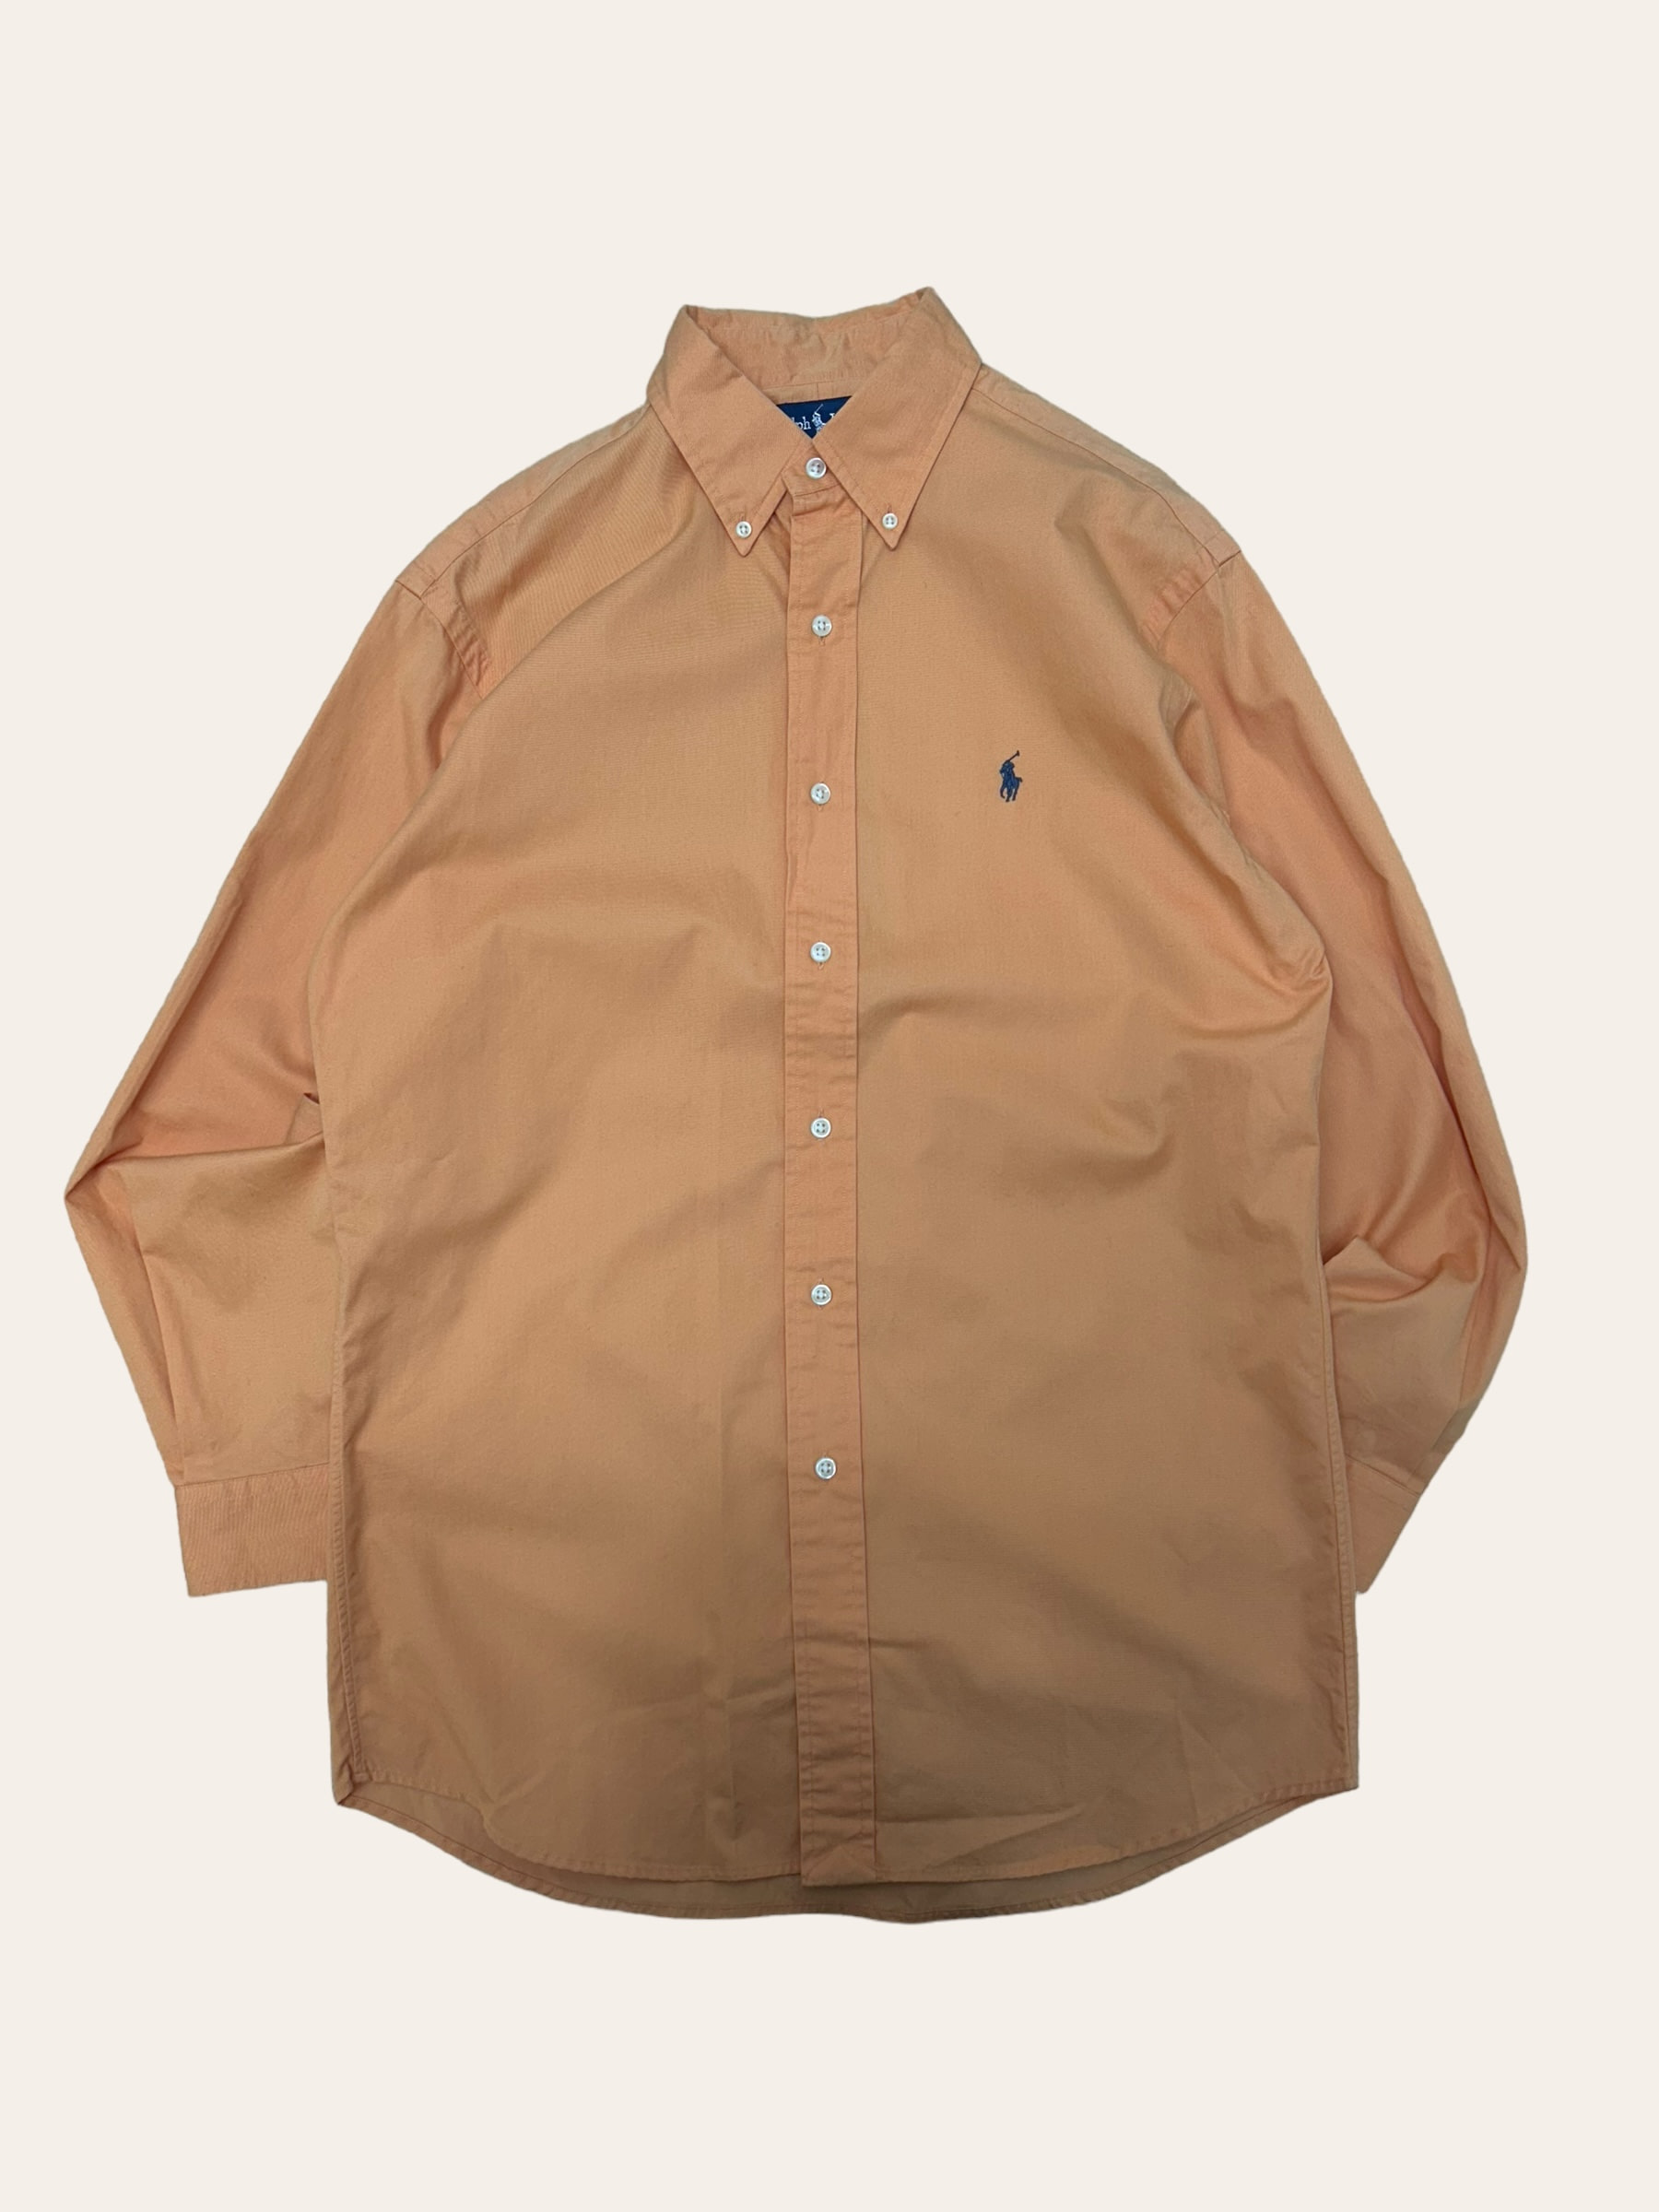 Polo ralph lauren orange blake fit solid shirt S